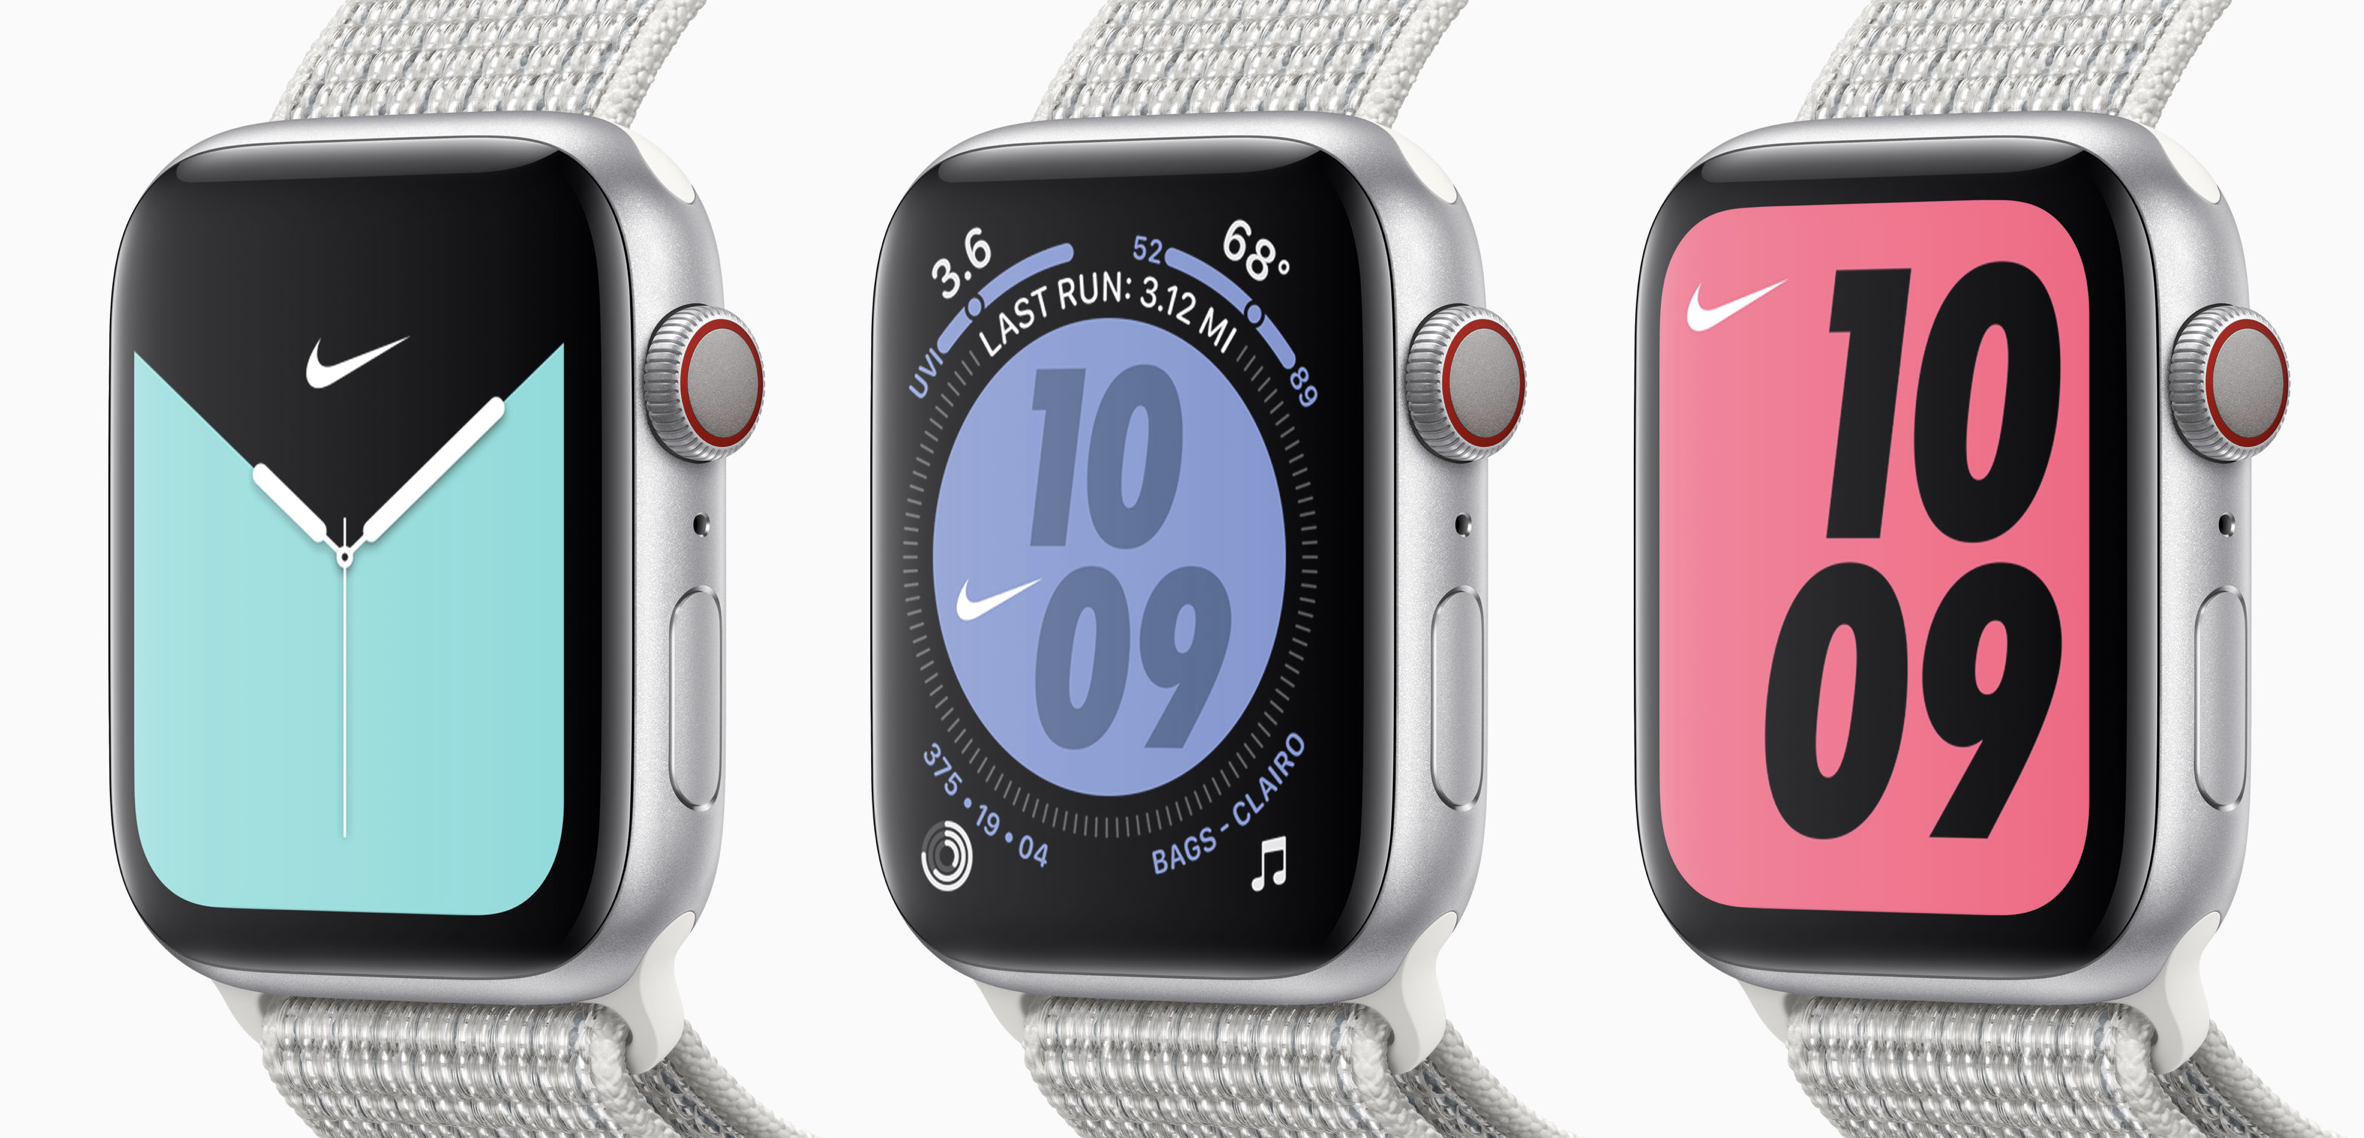 Apple Watch Nike+ watch faces